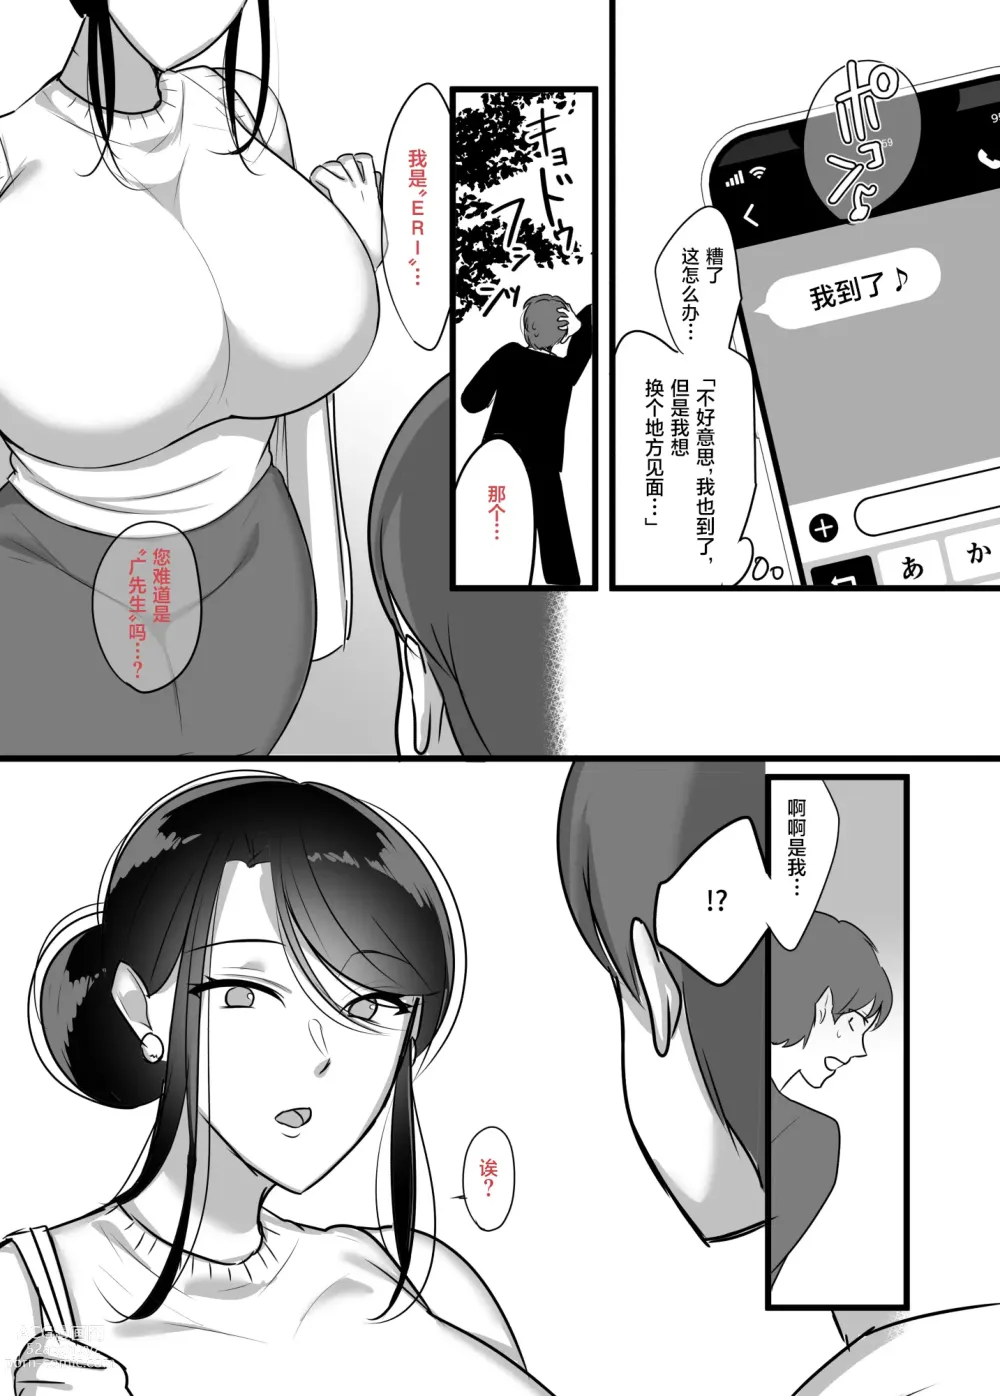 Page 8 of doujinshi 没想到那个魔鬼上司居然会成为我的炮友...